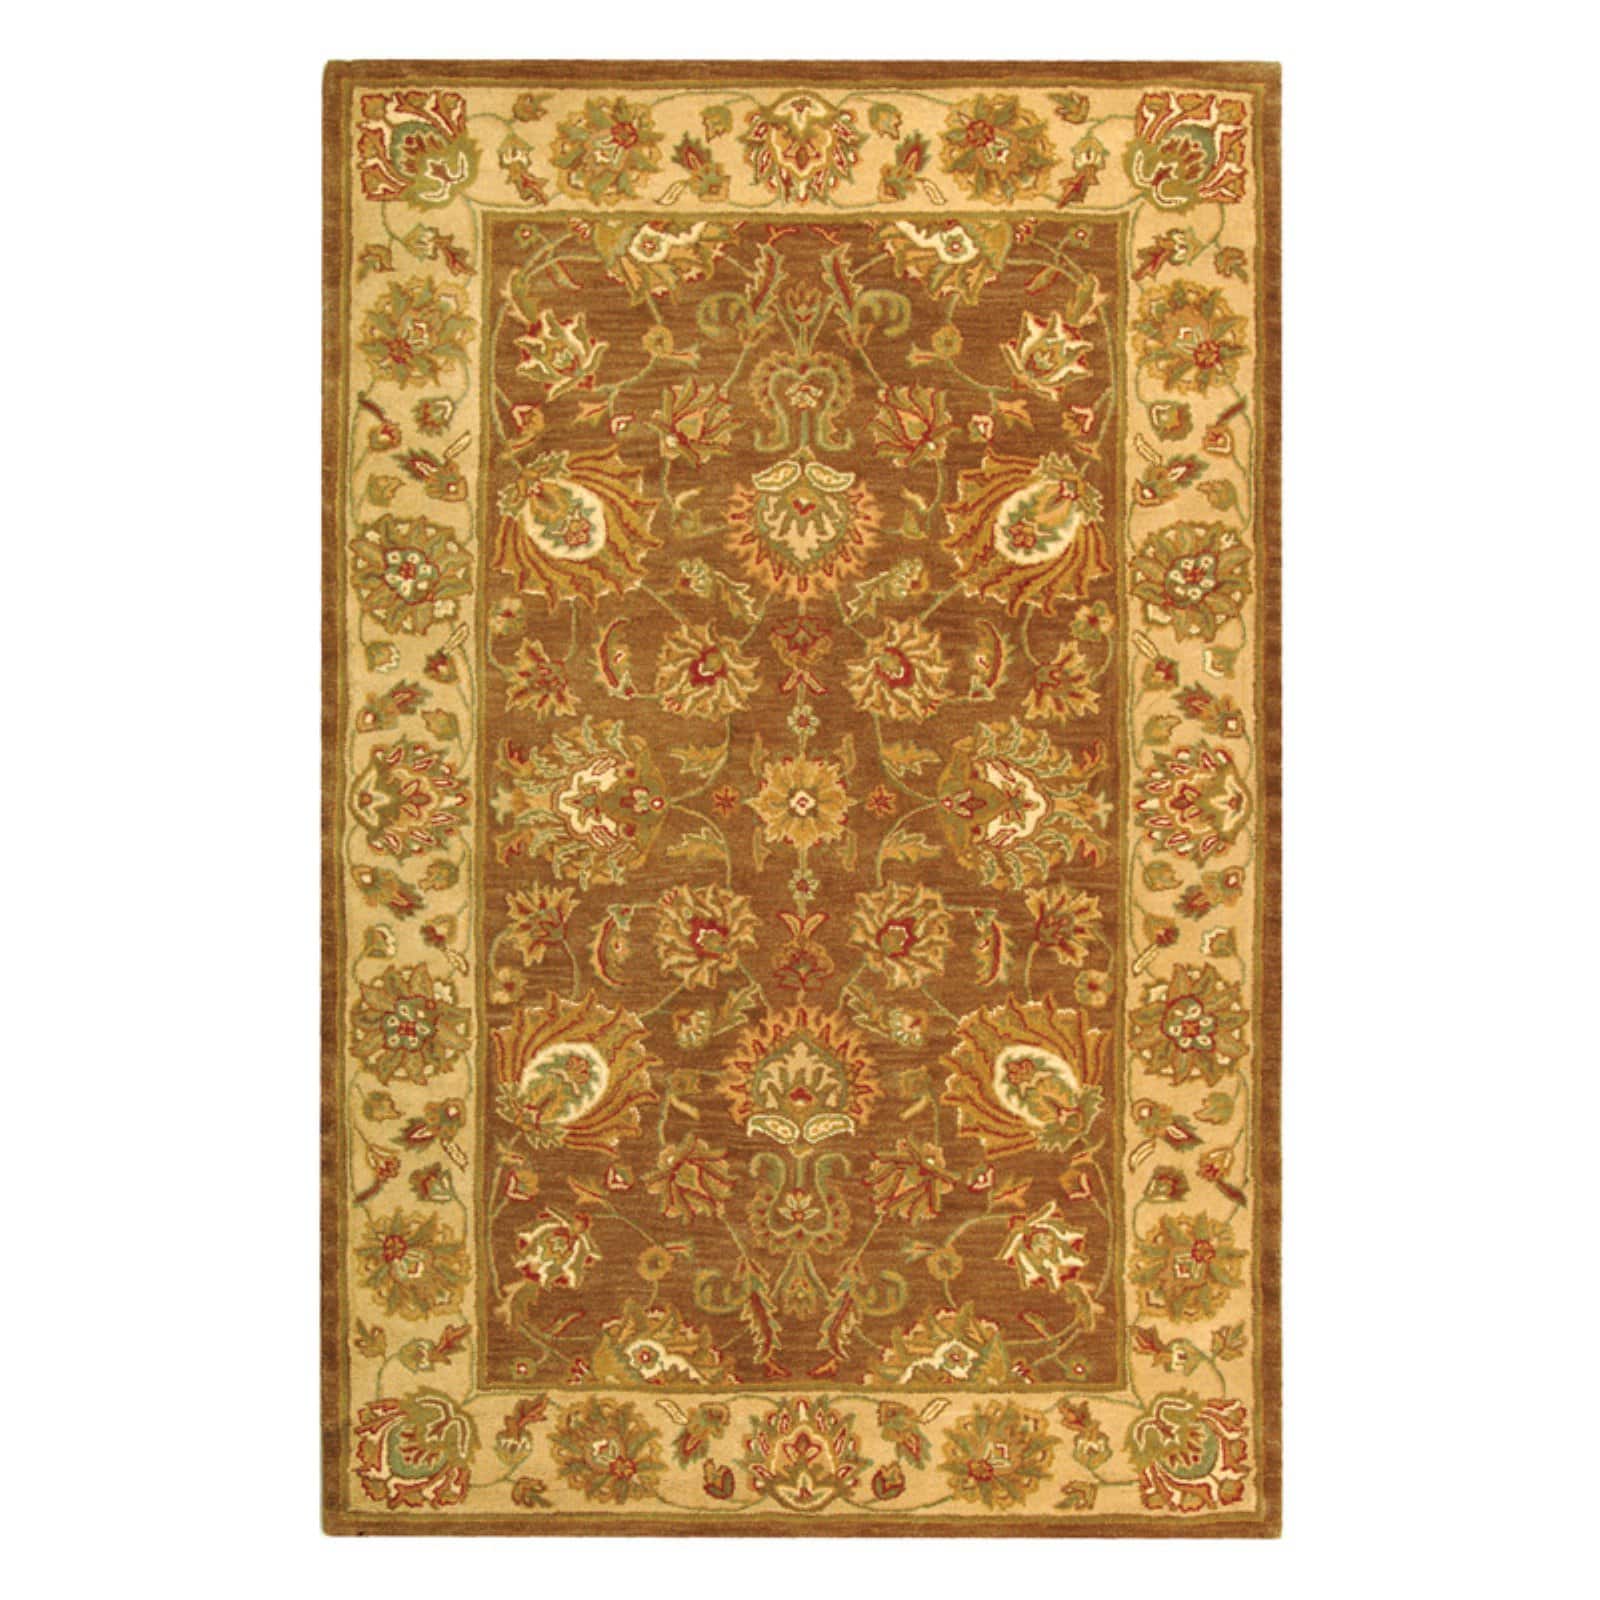 SAFAVIEH Heritage Regis Traditional Wool Area Rug, Brown/Ivory, 9'6" x 13'6" - image 4 of 9